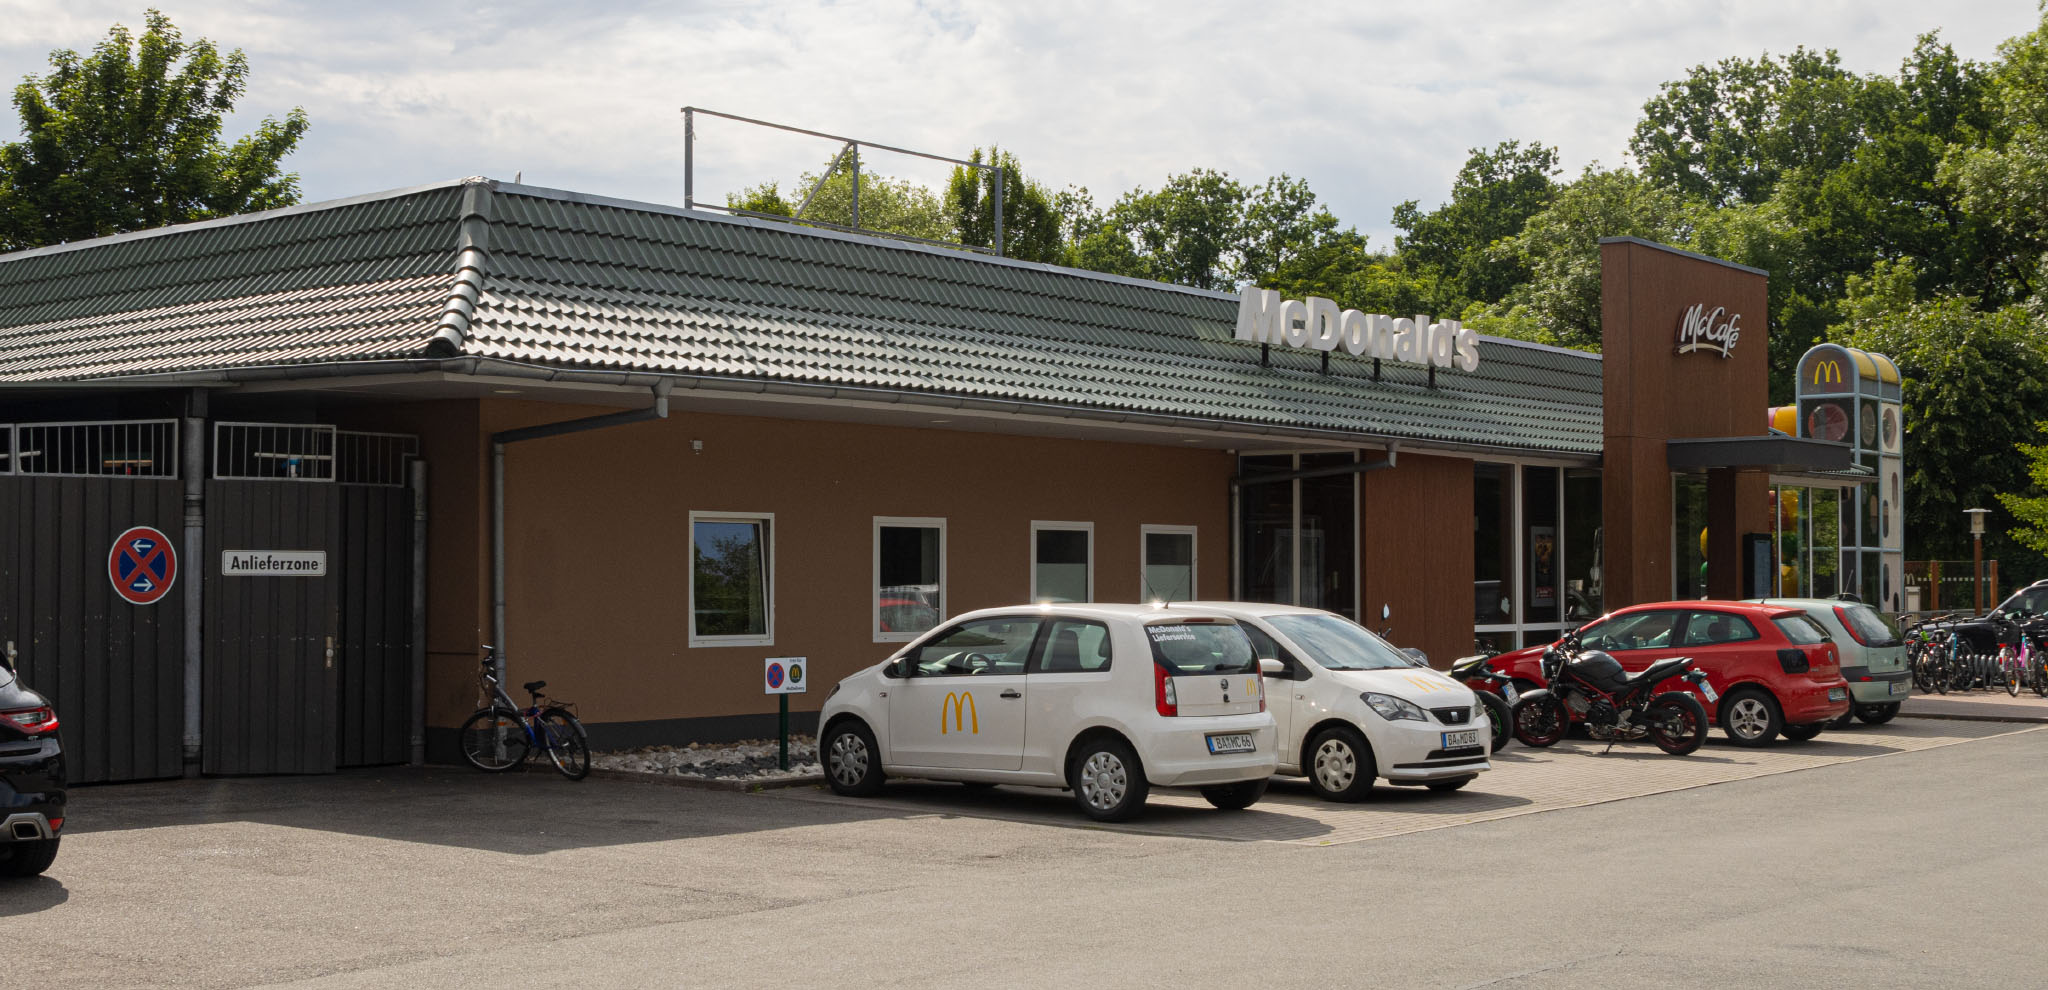 Das McDonald’s-Restaurant in Neustadt bei Coburg